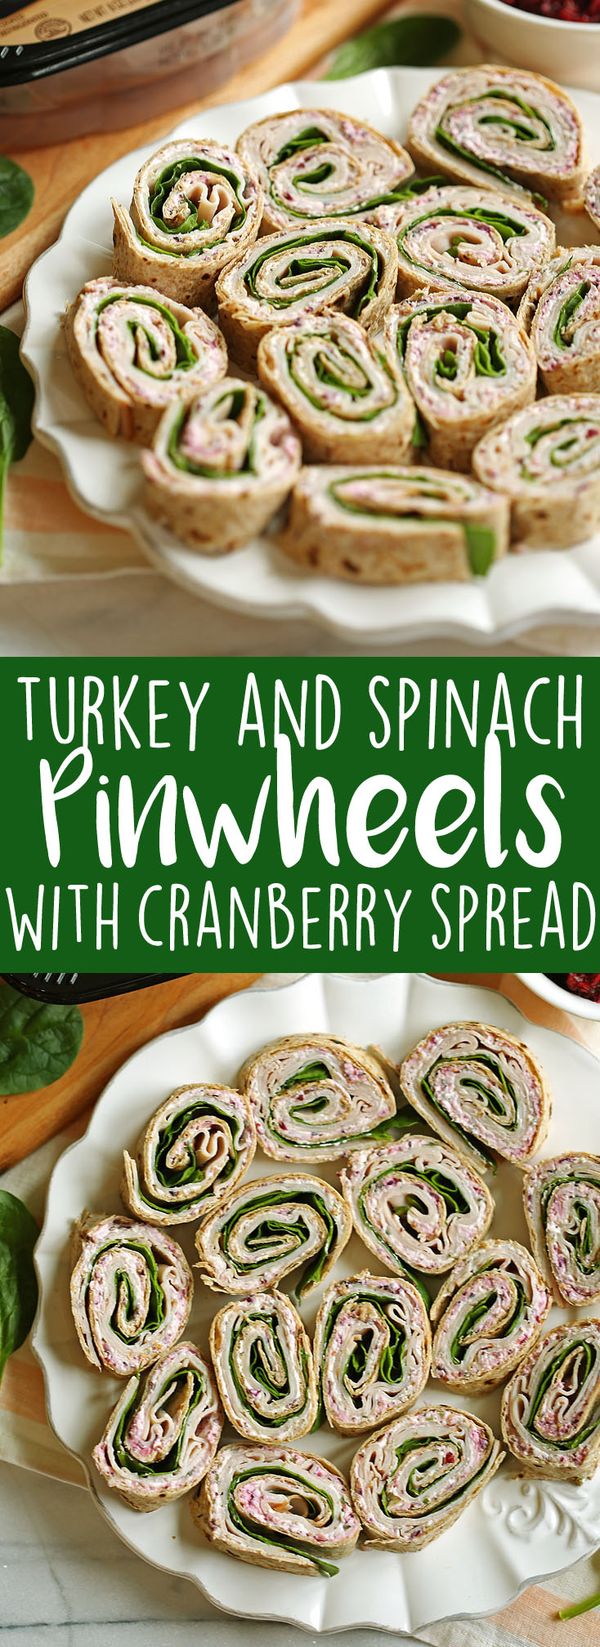 Turkey Pinwheels with Cranberry Spread